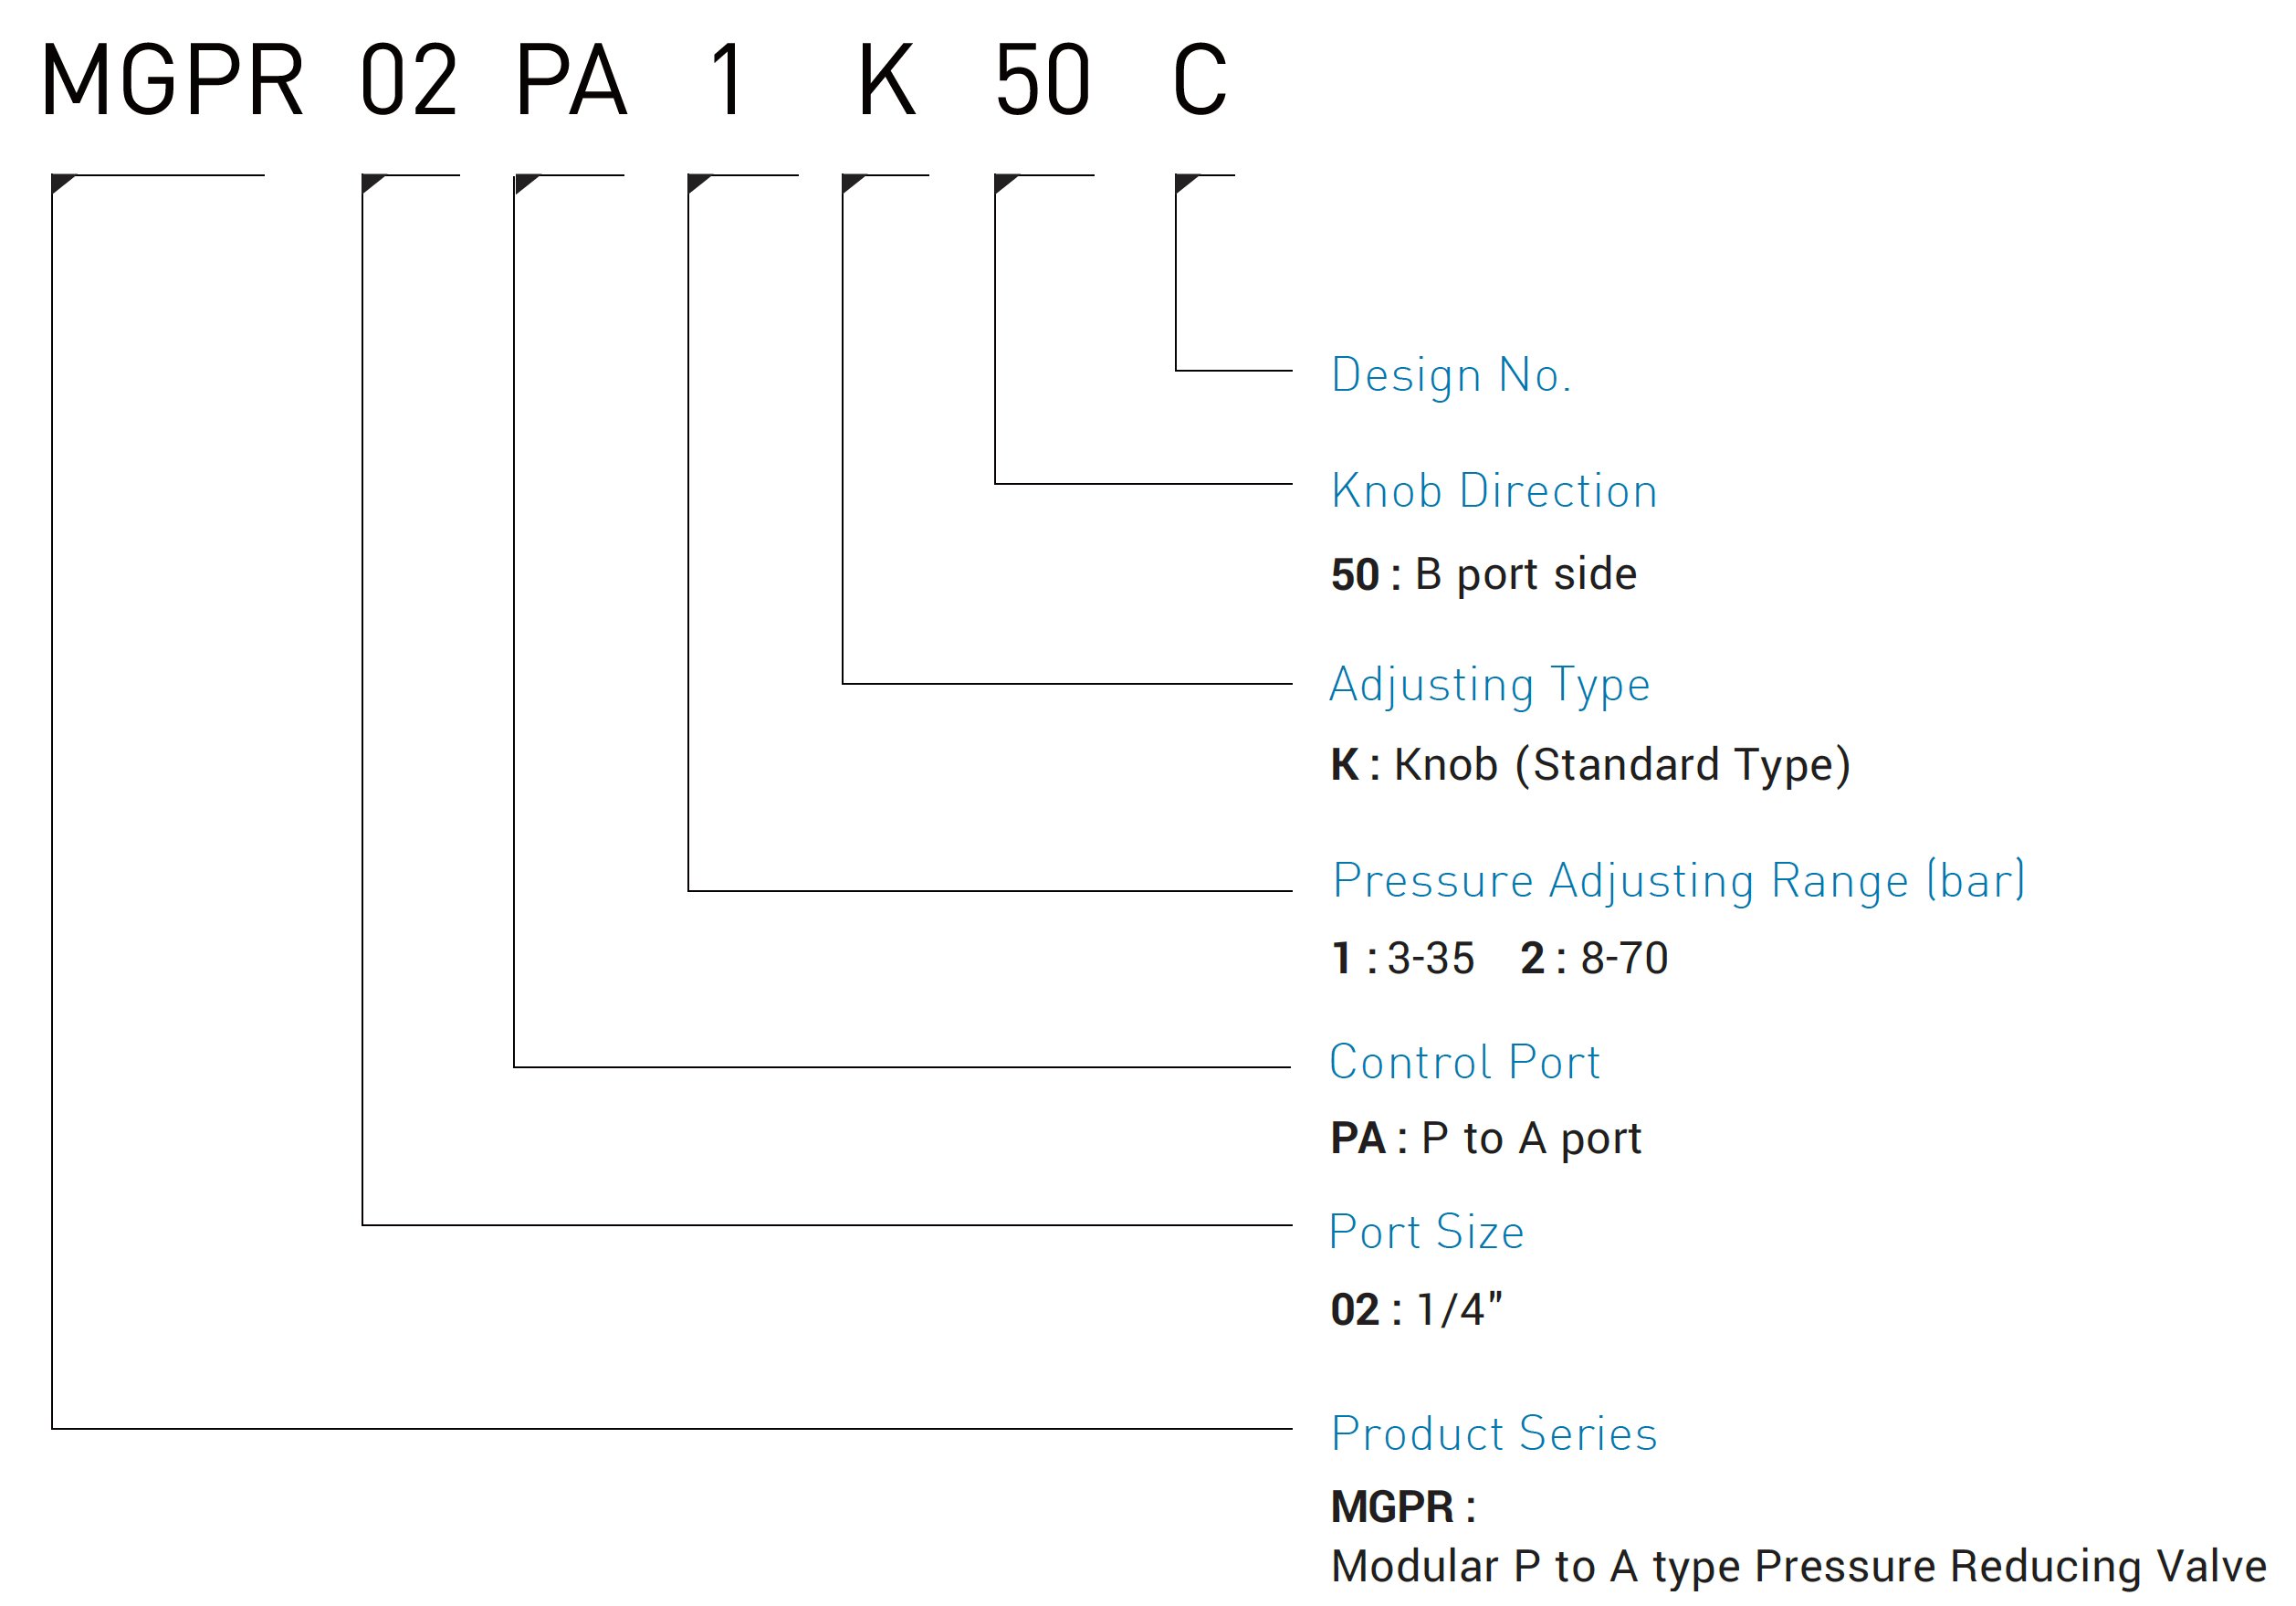 CML Modular P to A type Pressure Reducing Valve MGPR Model Code